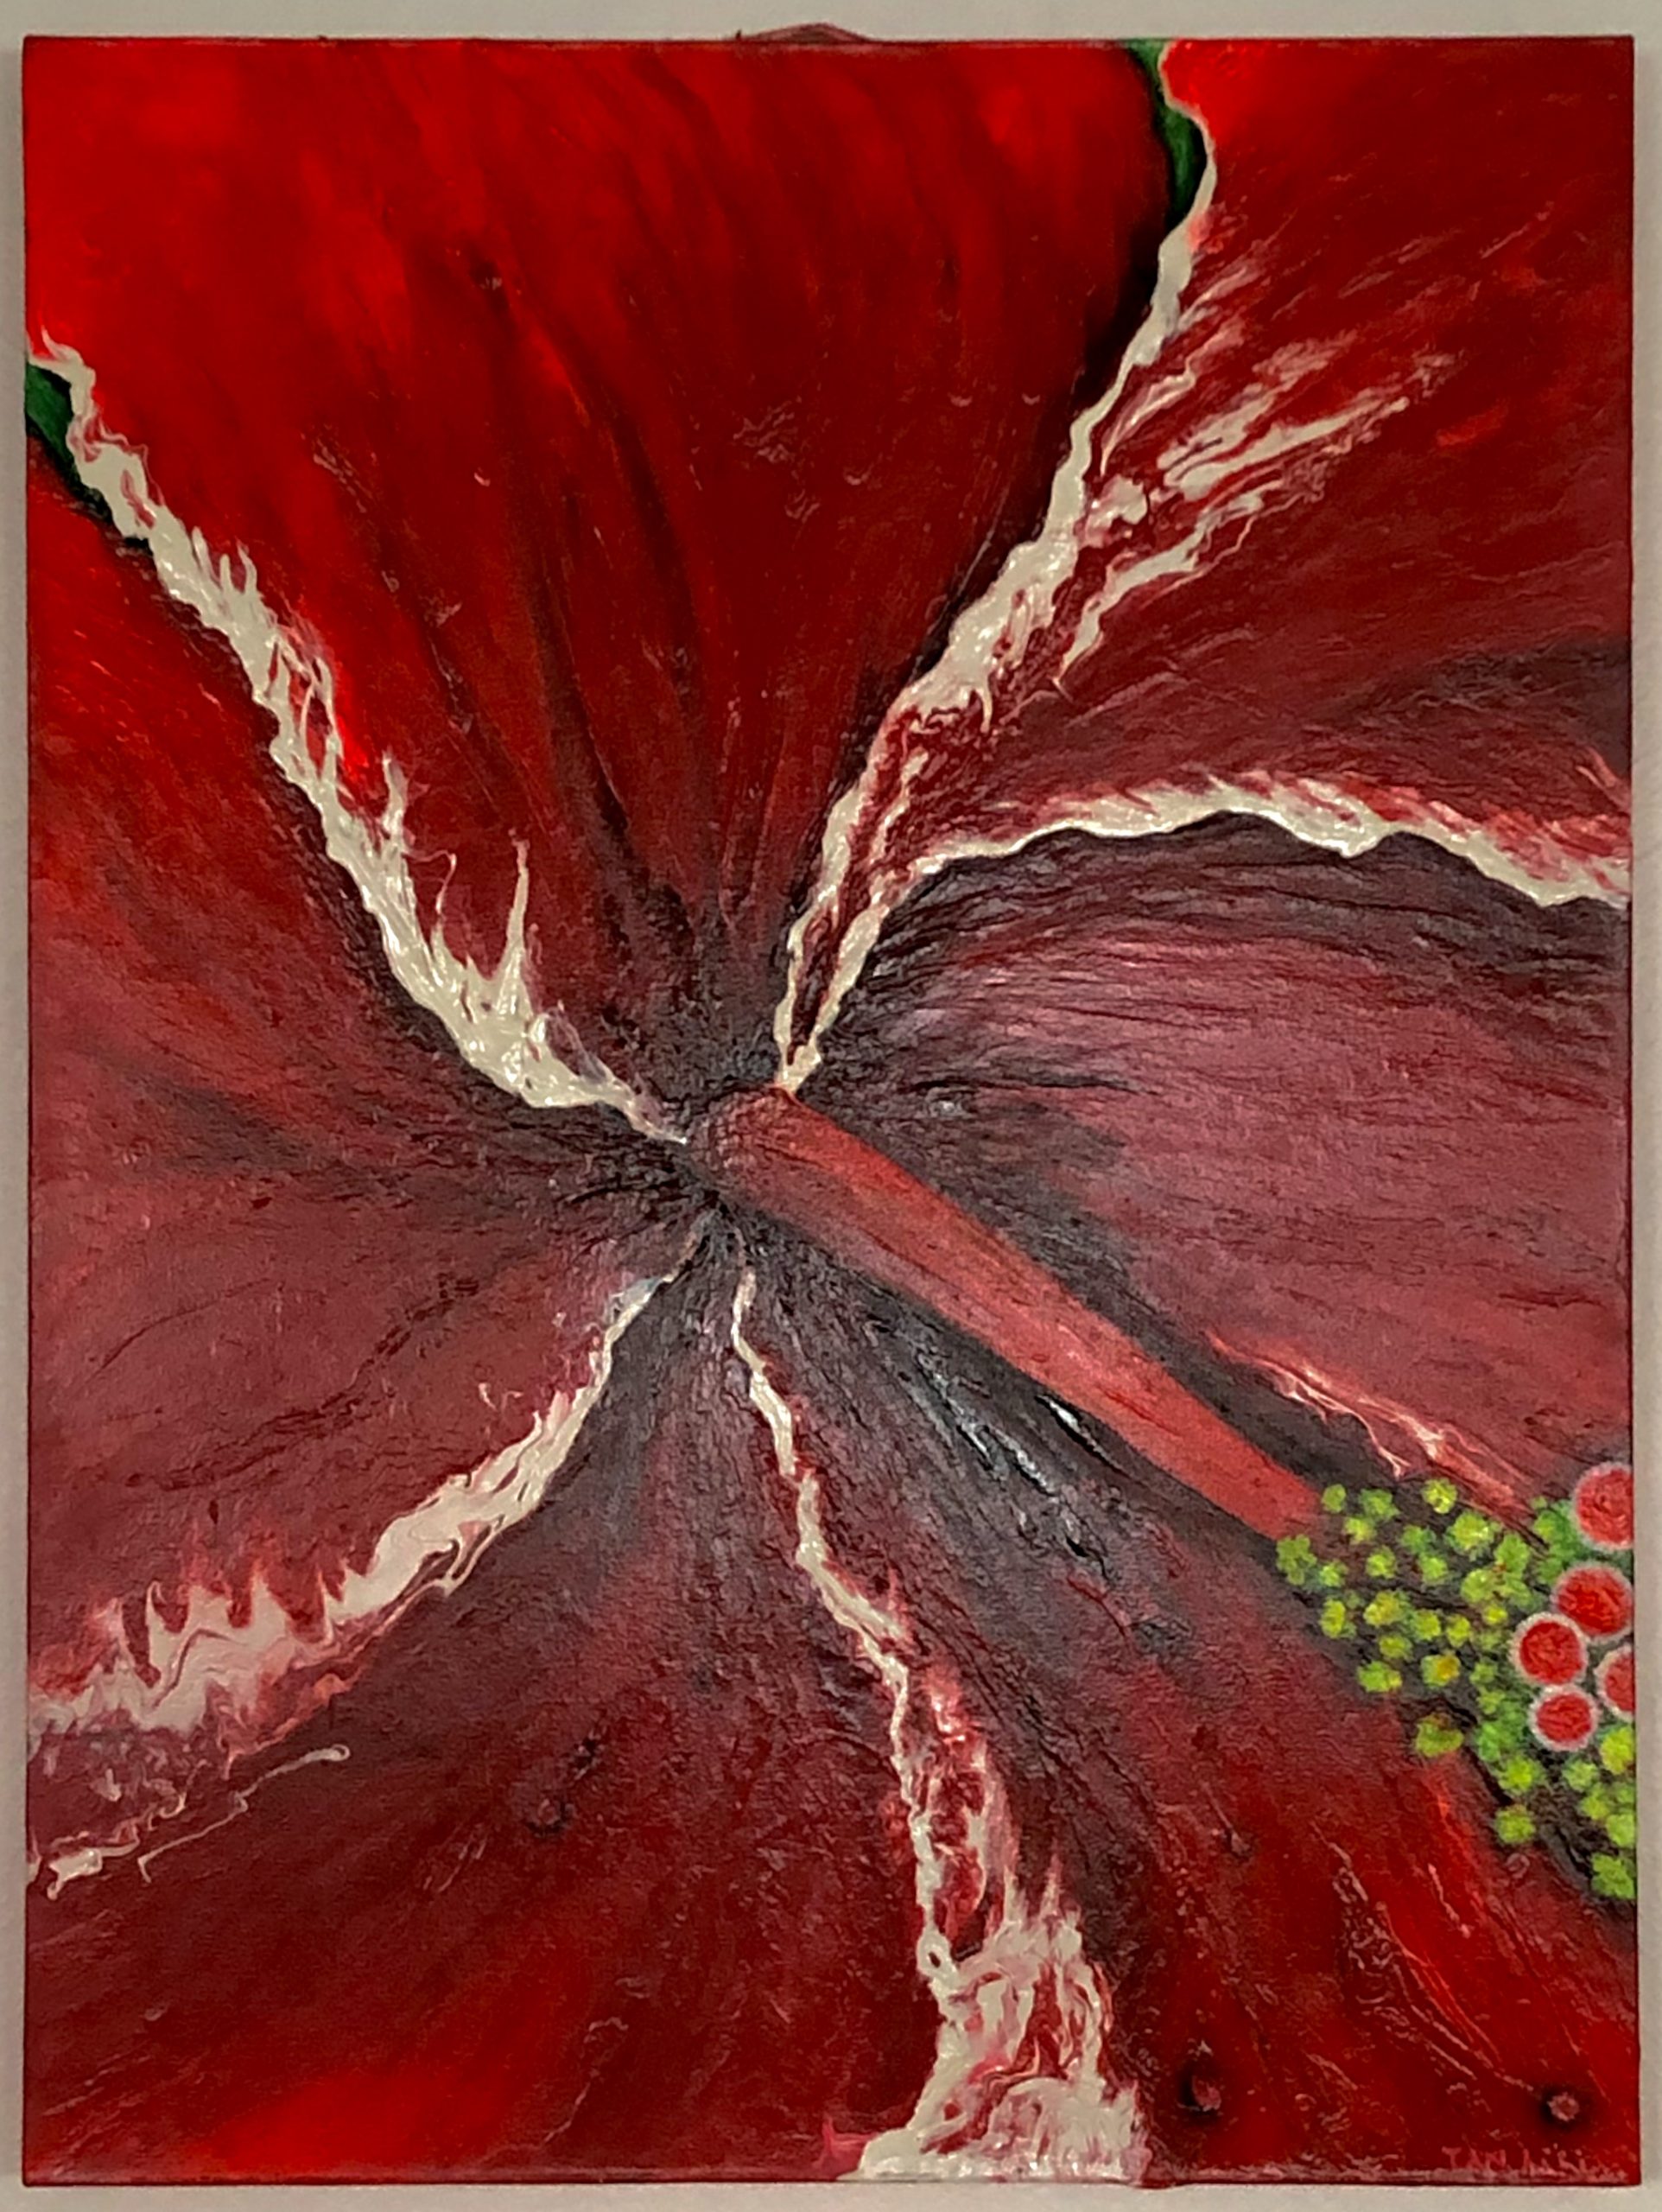 Red Hibiscus painting for sale by artist Li Li Tan